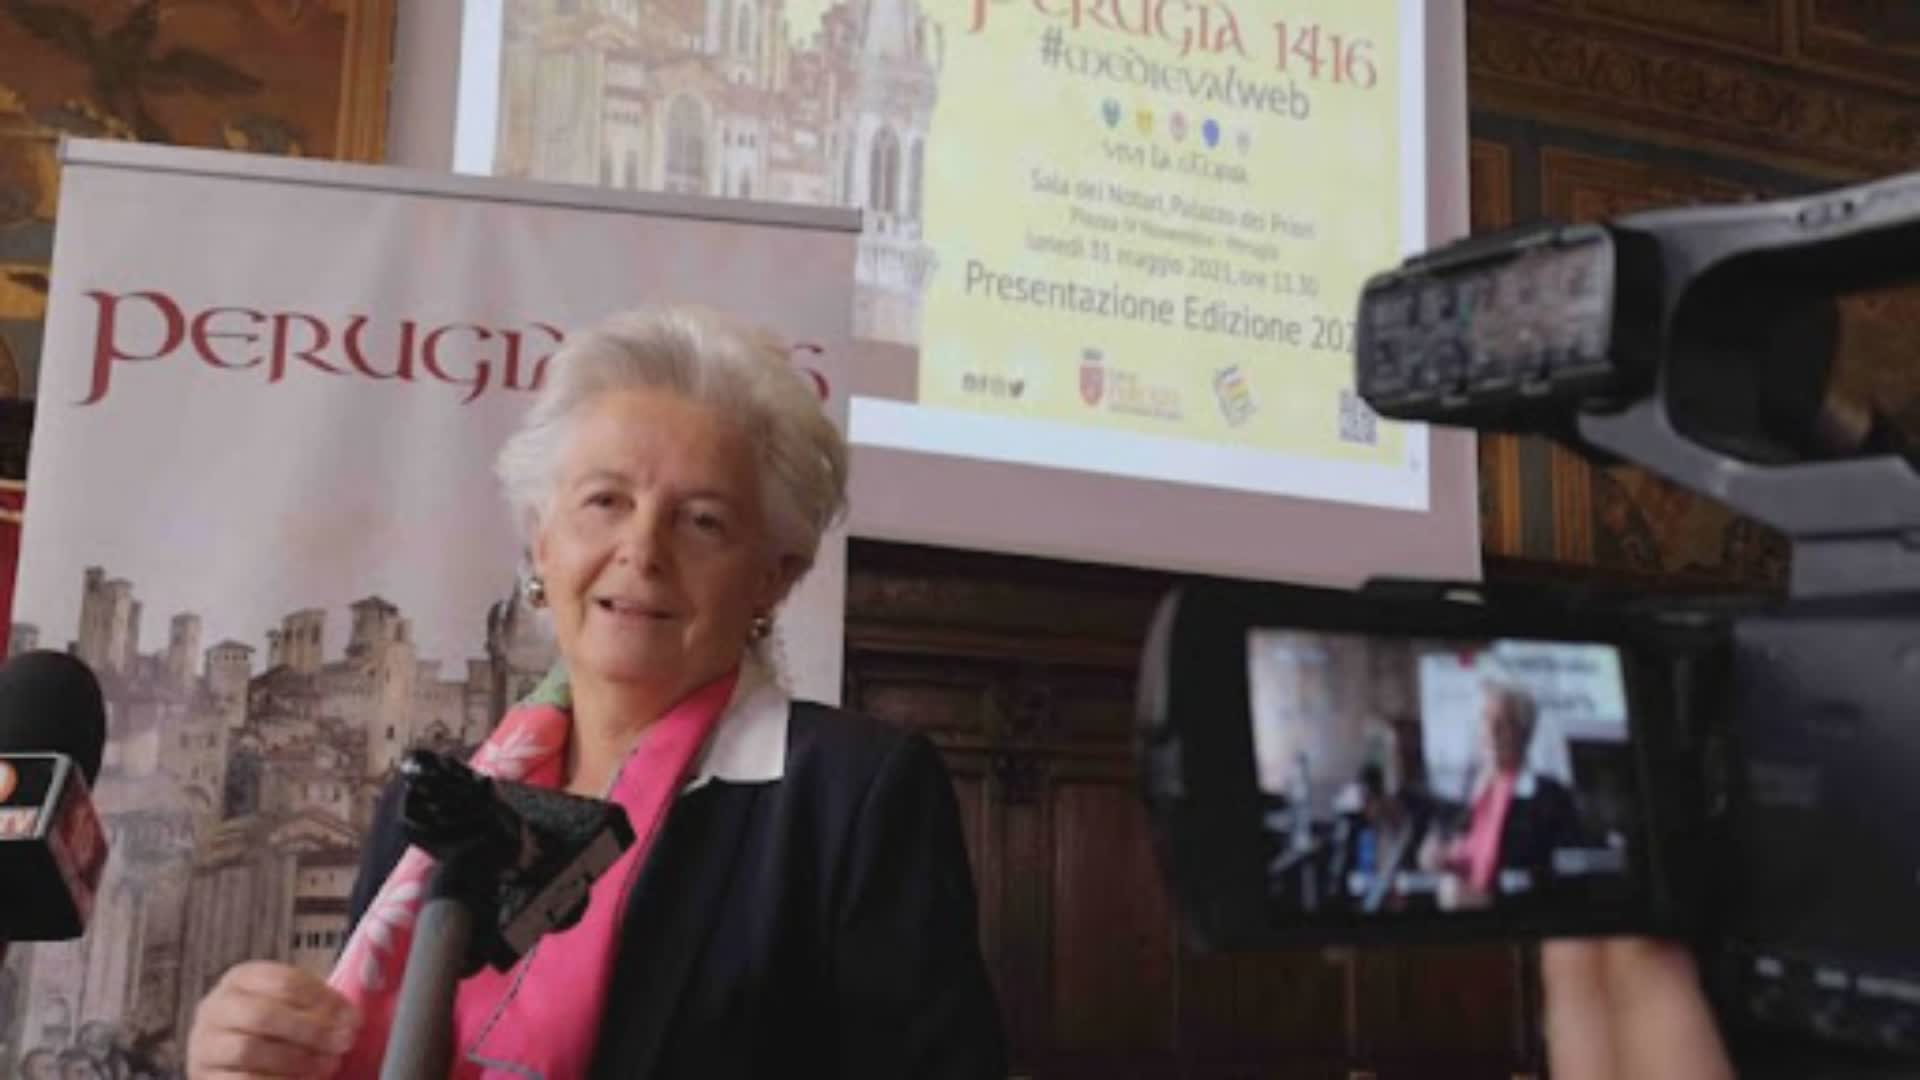 Perugia 1416, Teresa Severini confermata presidente